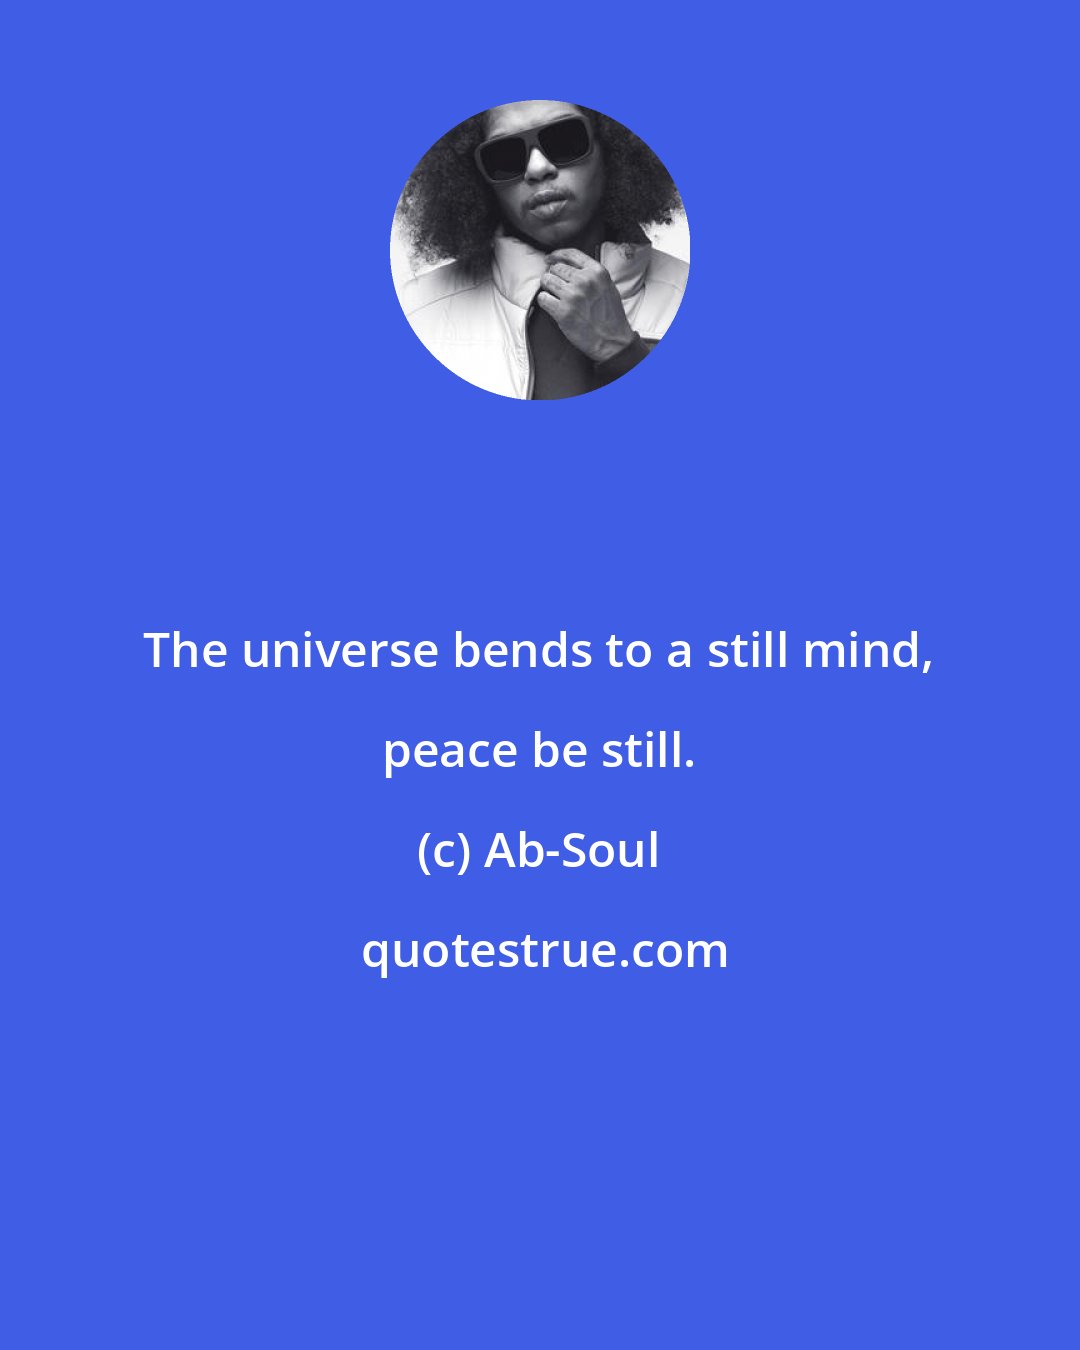 Ab-Soul: The universe bends to a still mind, peace be still.